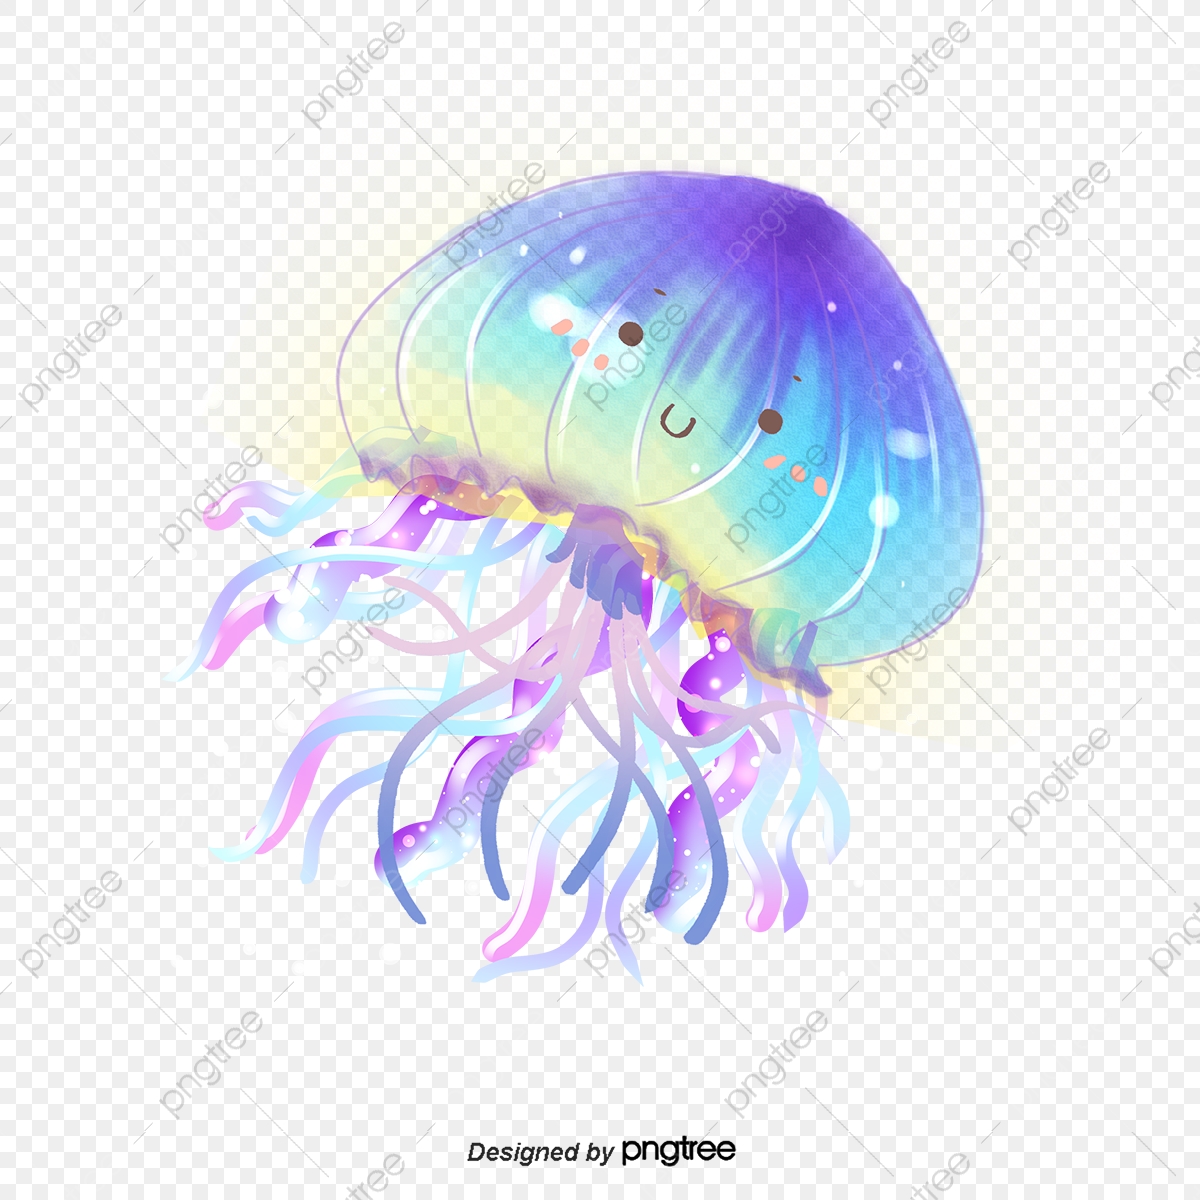 jellyfish clipart under sea